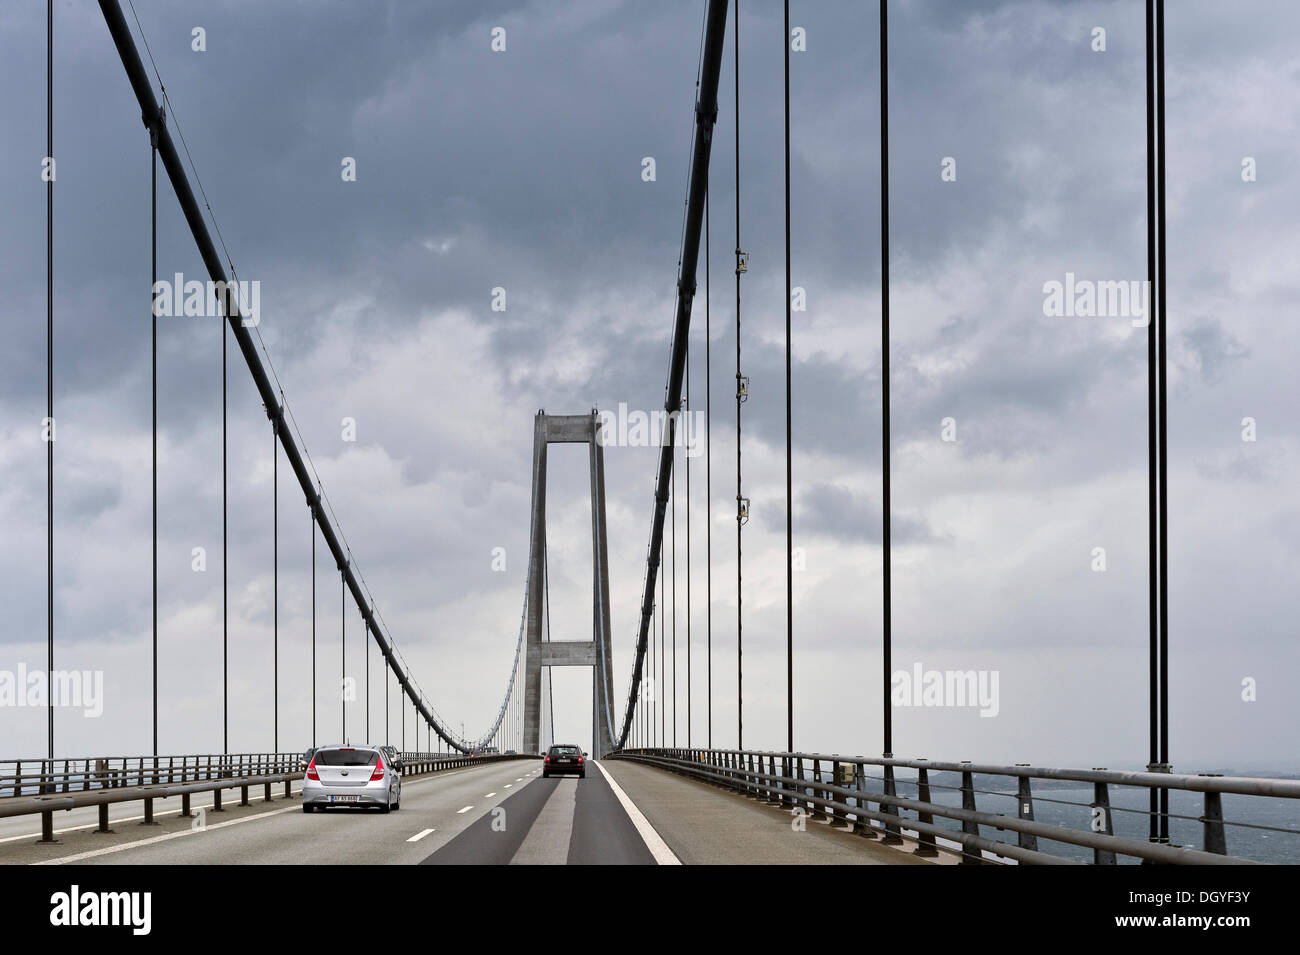 Storebæltsbroen oder große-Belt-Brücke, Nyborg, Region Süddänemark, Dänemark Stockfoto